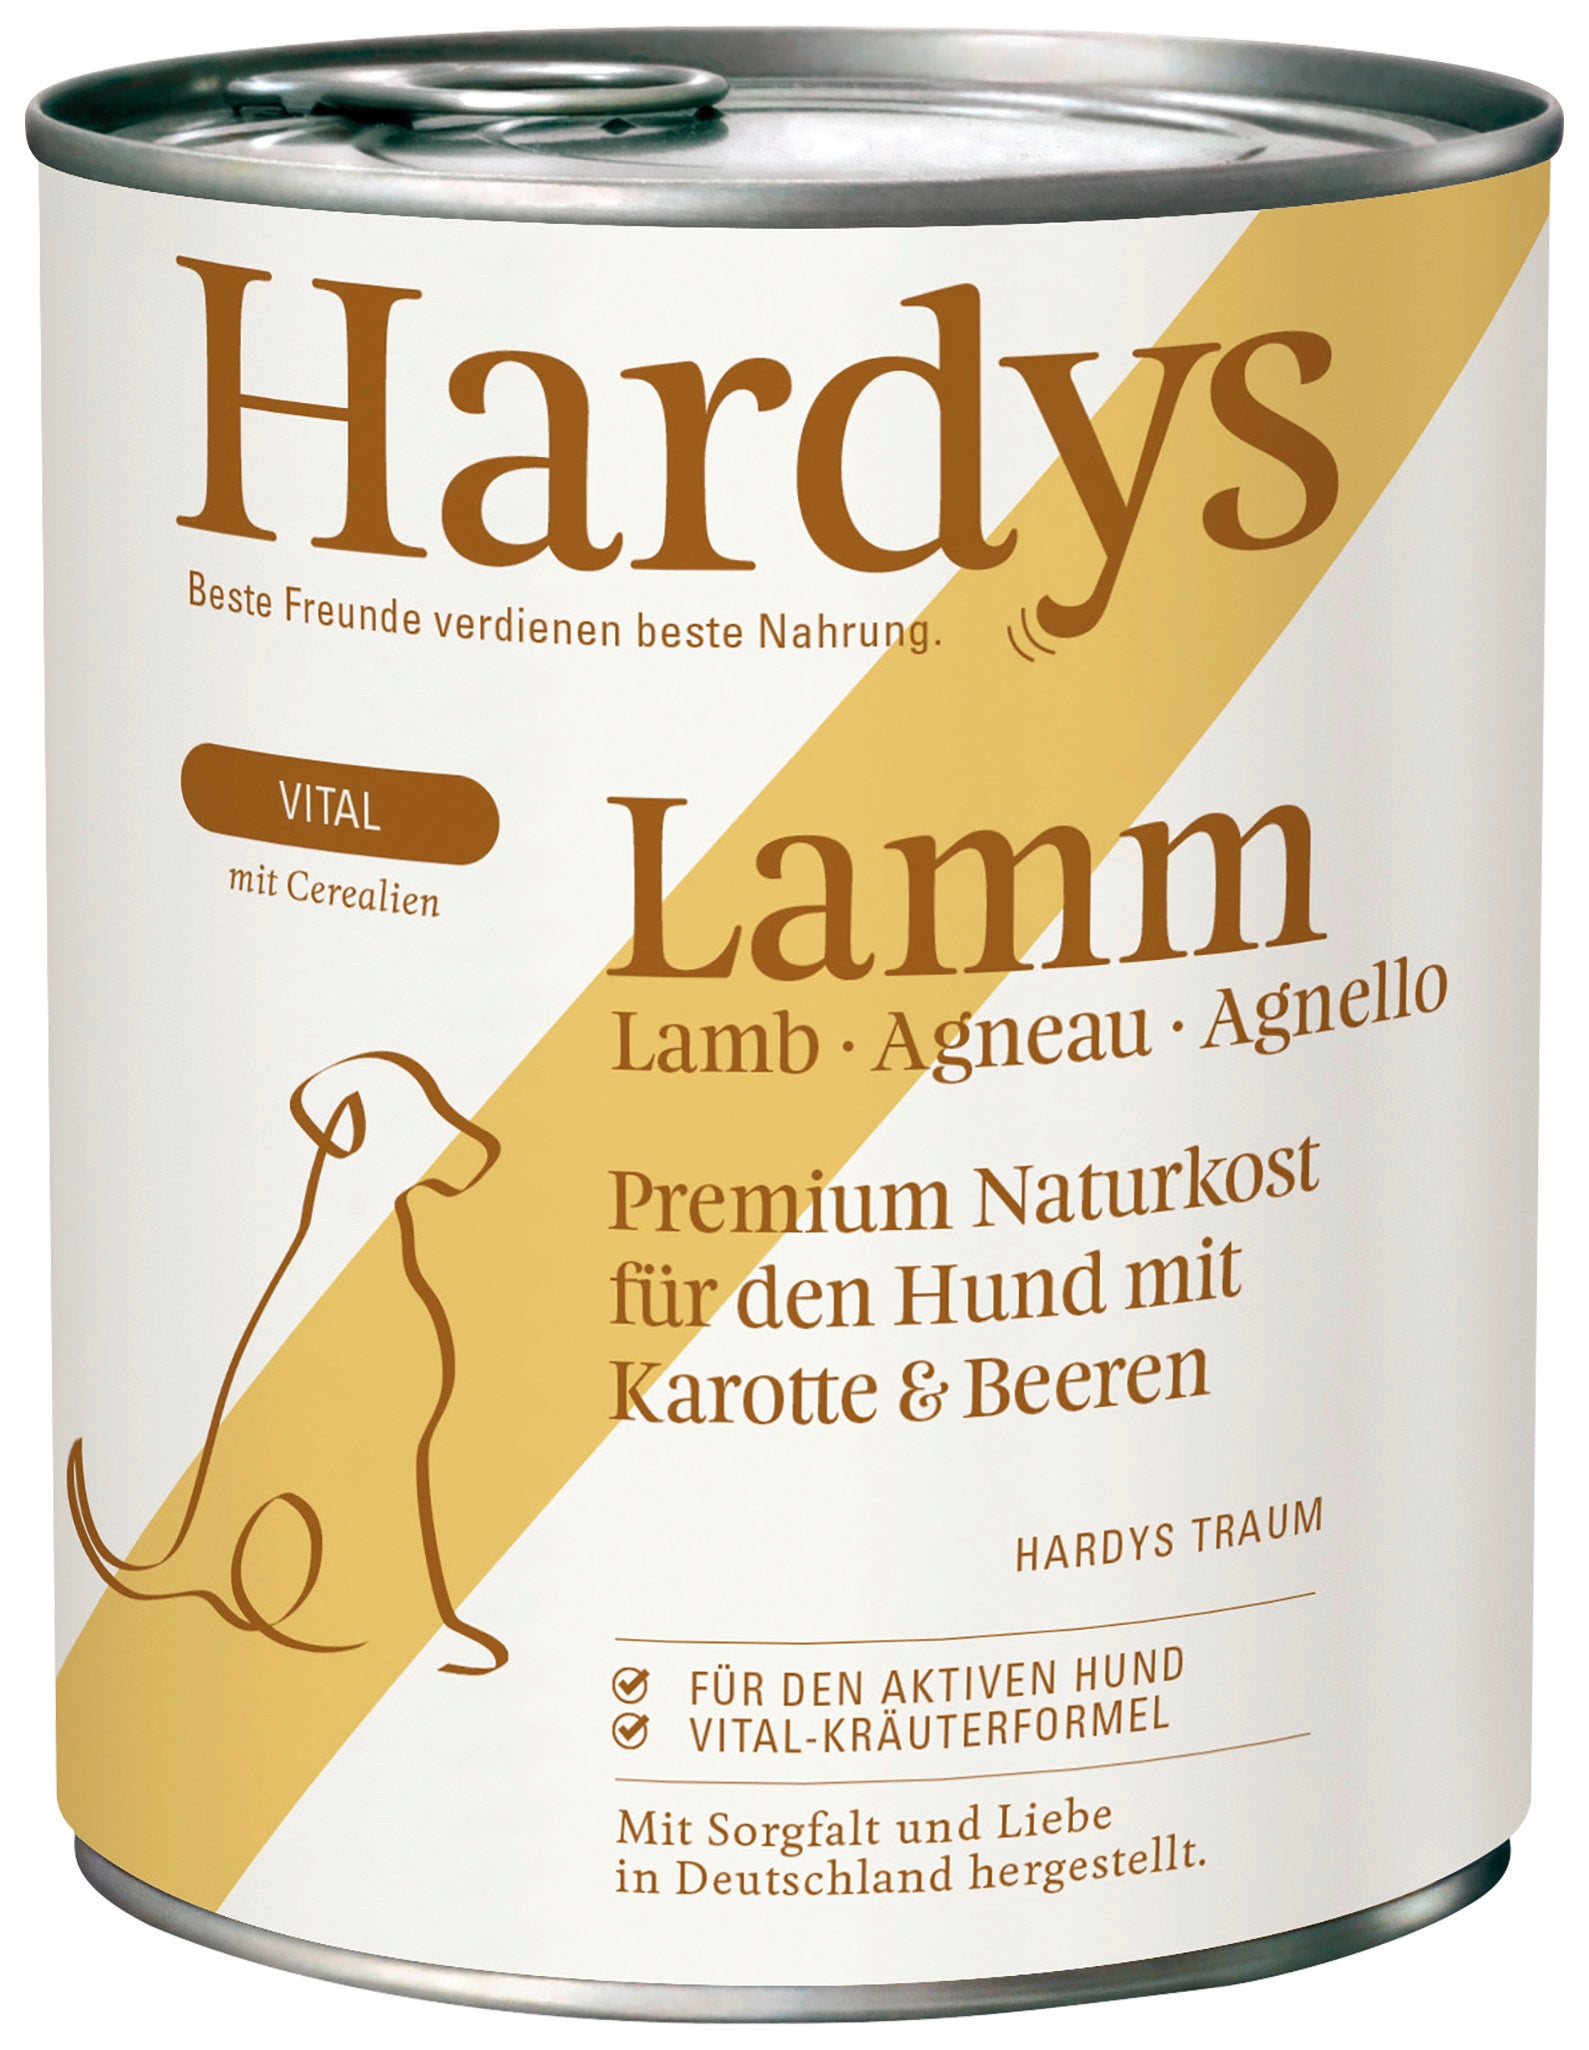 Image of Hardys Lamm mit Karotte & Beeren - Vital 800g